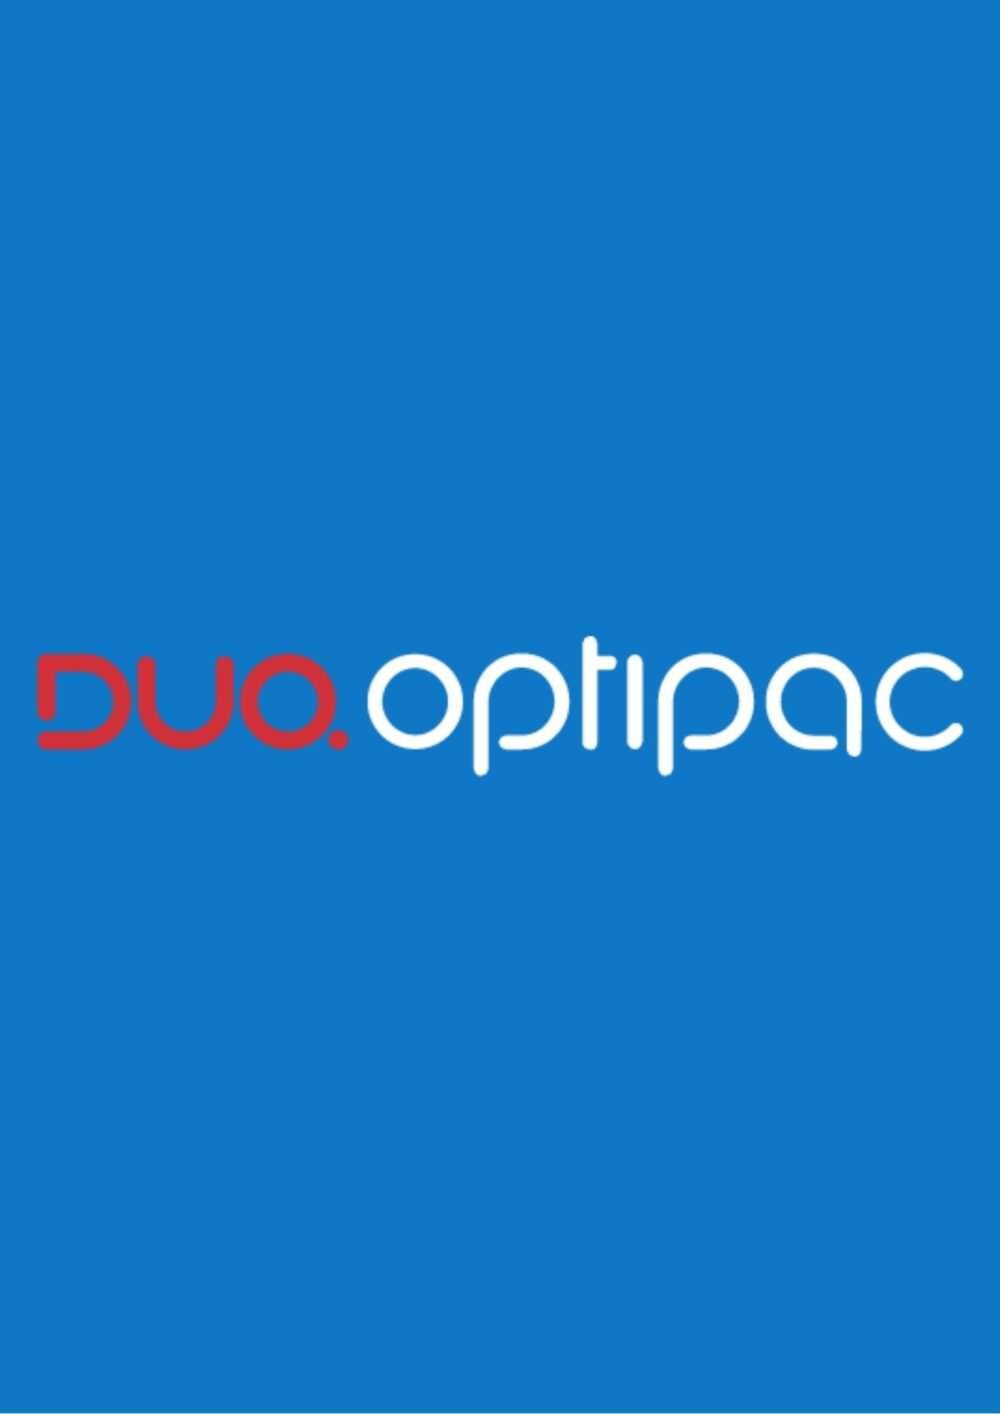 DuoOptipac logo